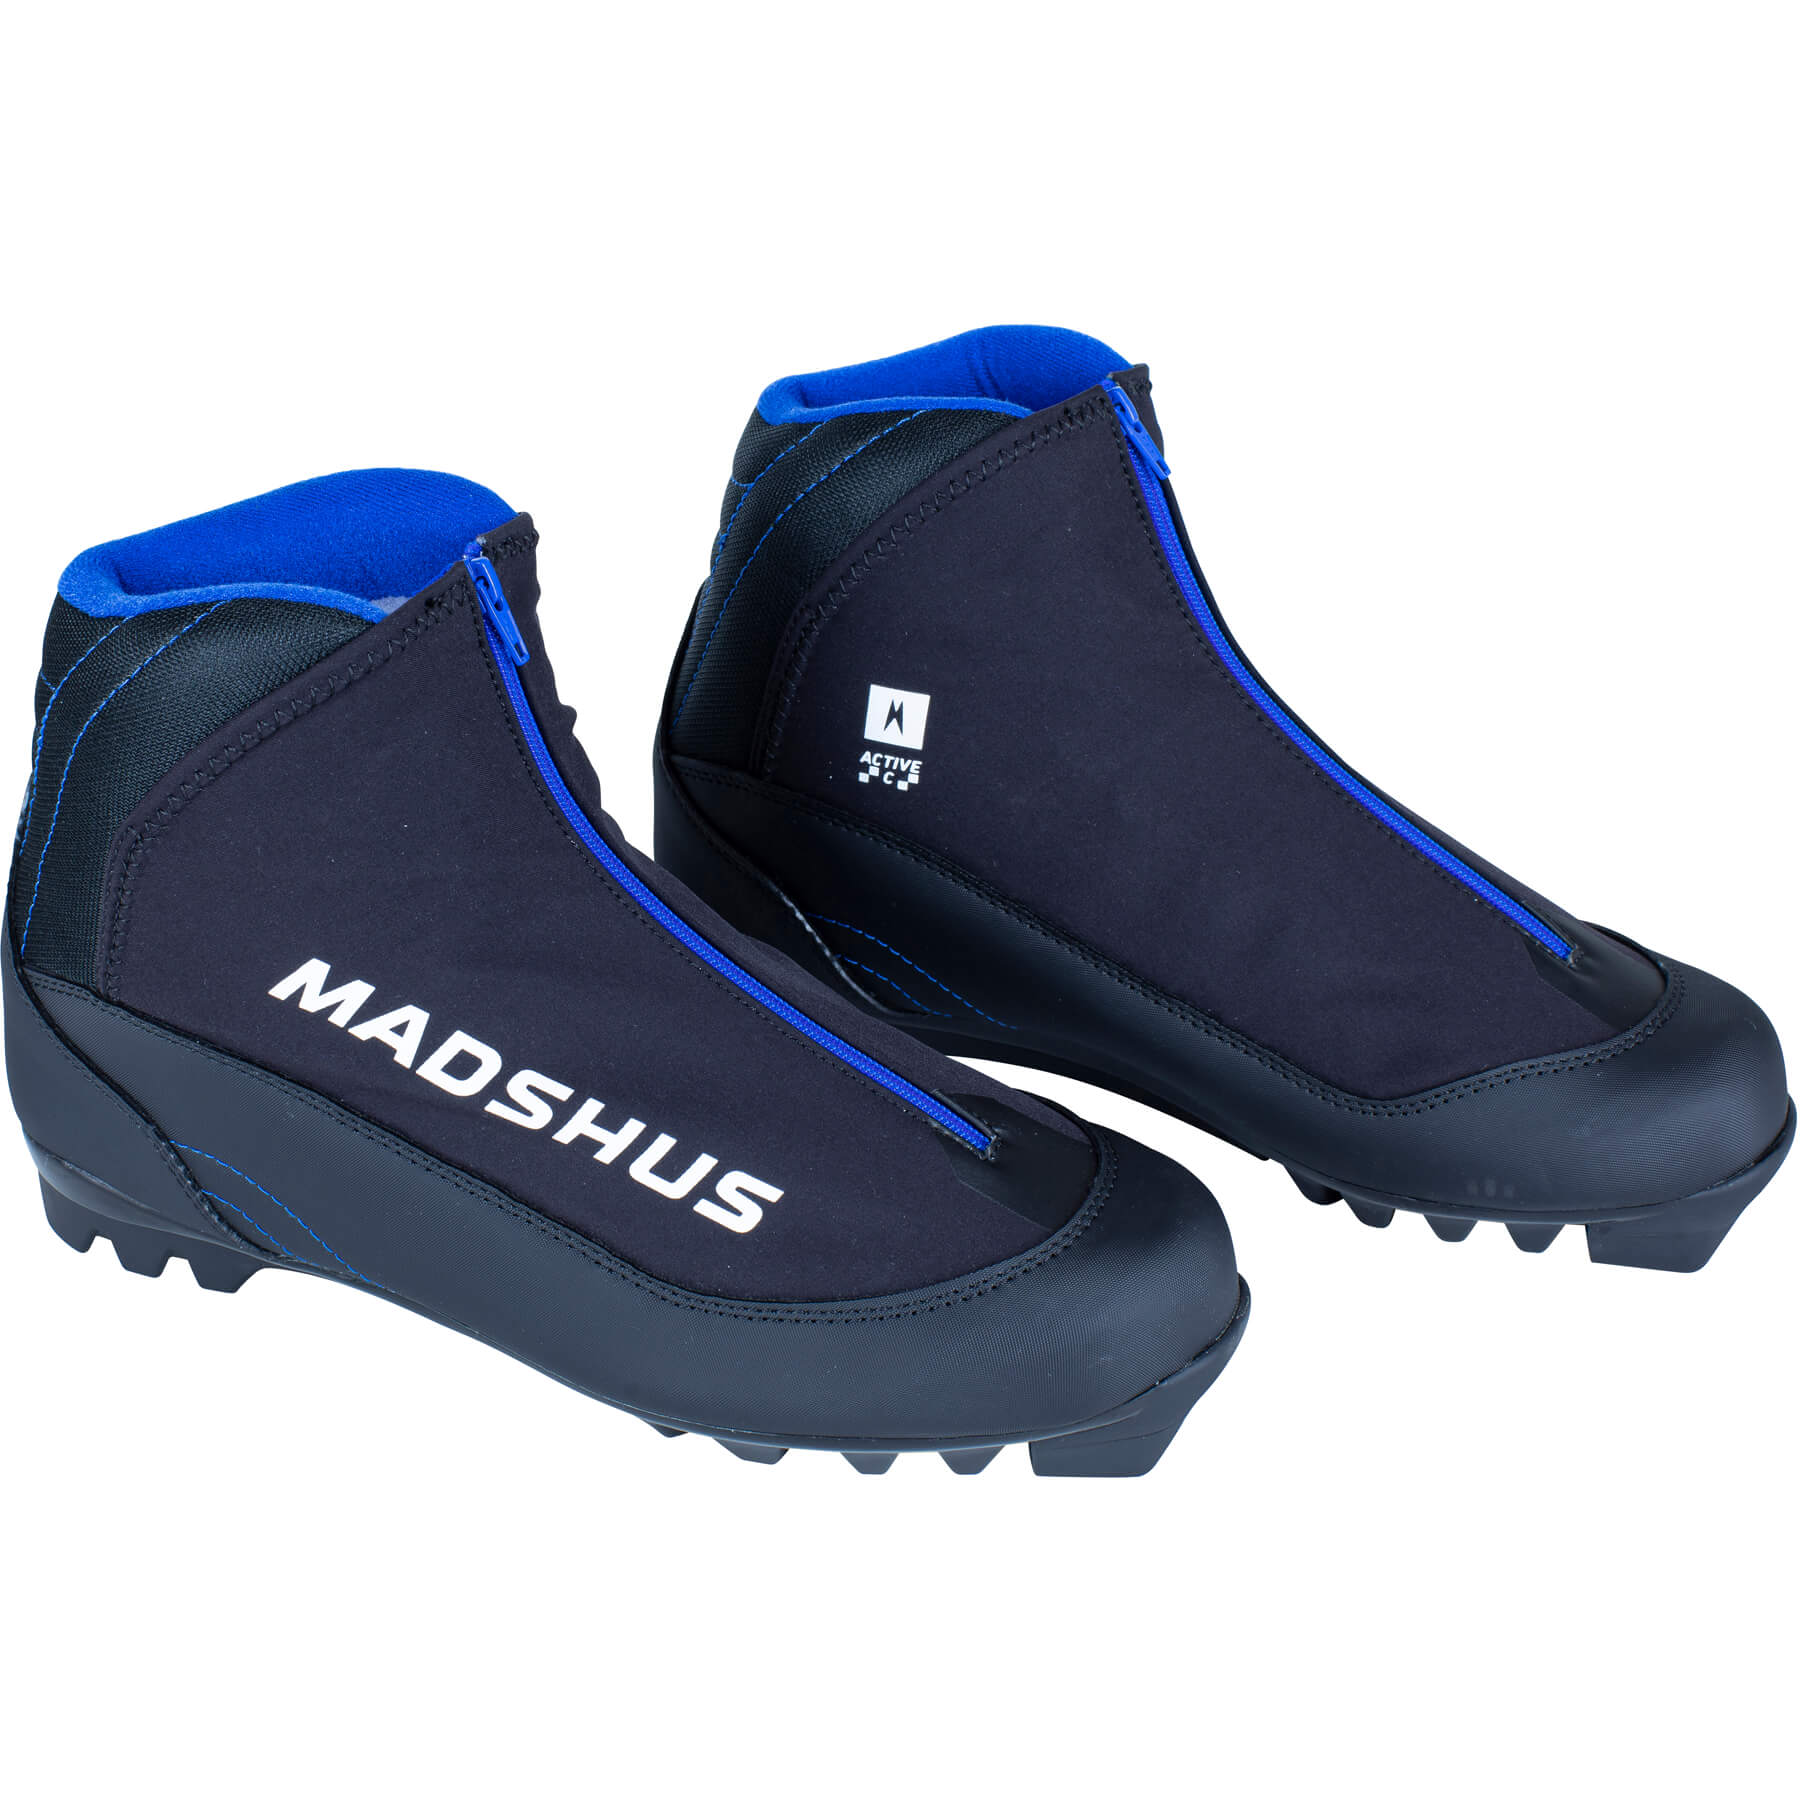 Madshus Active Classic Boot